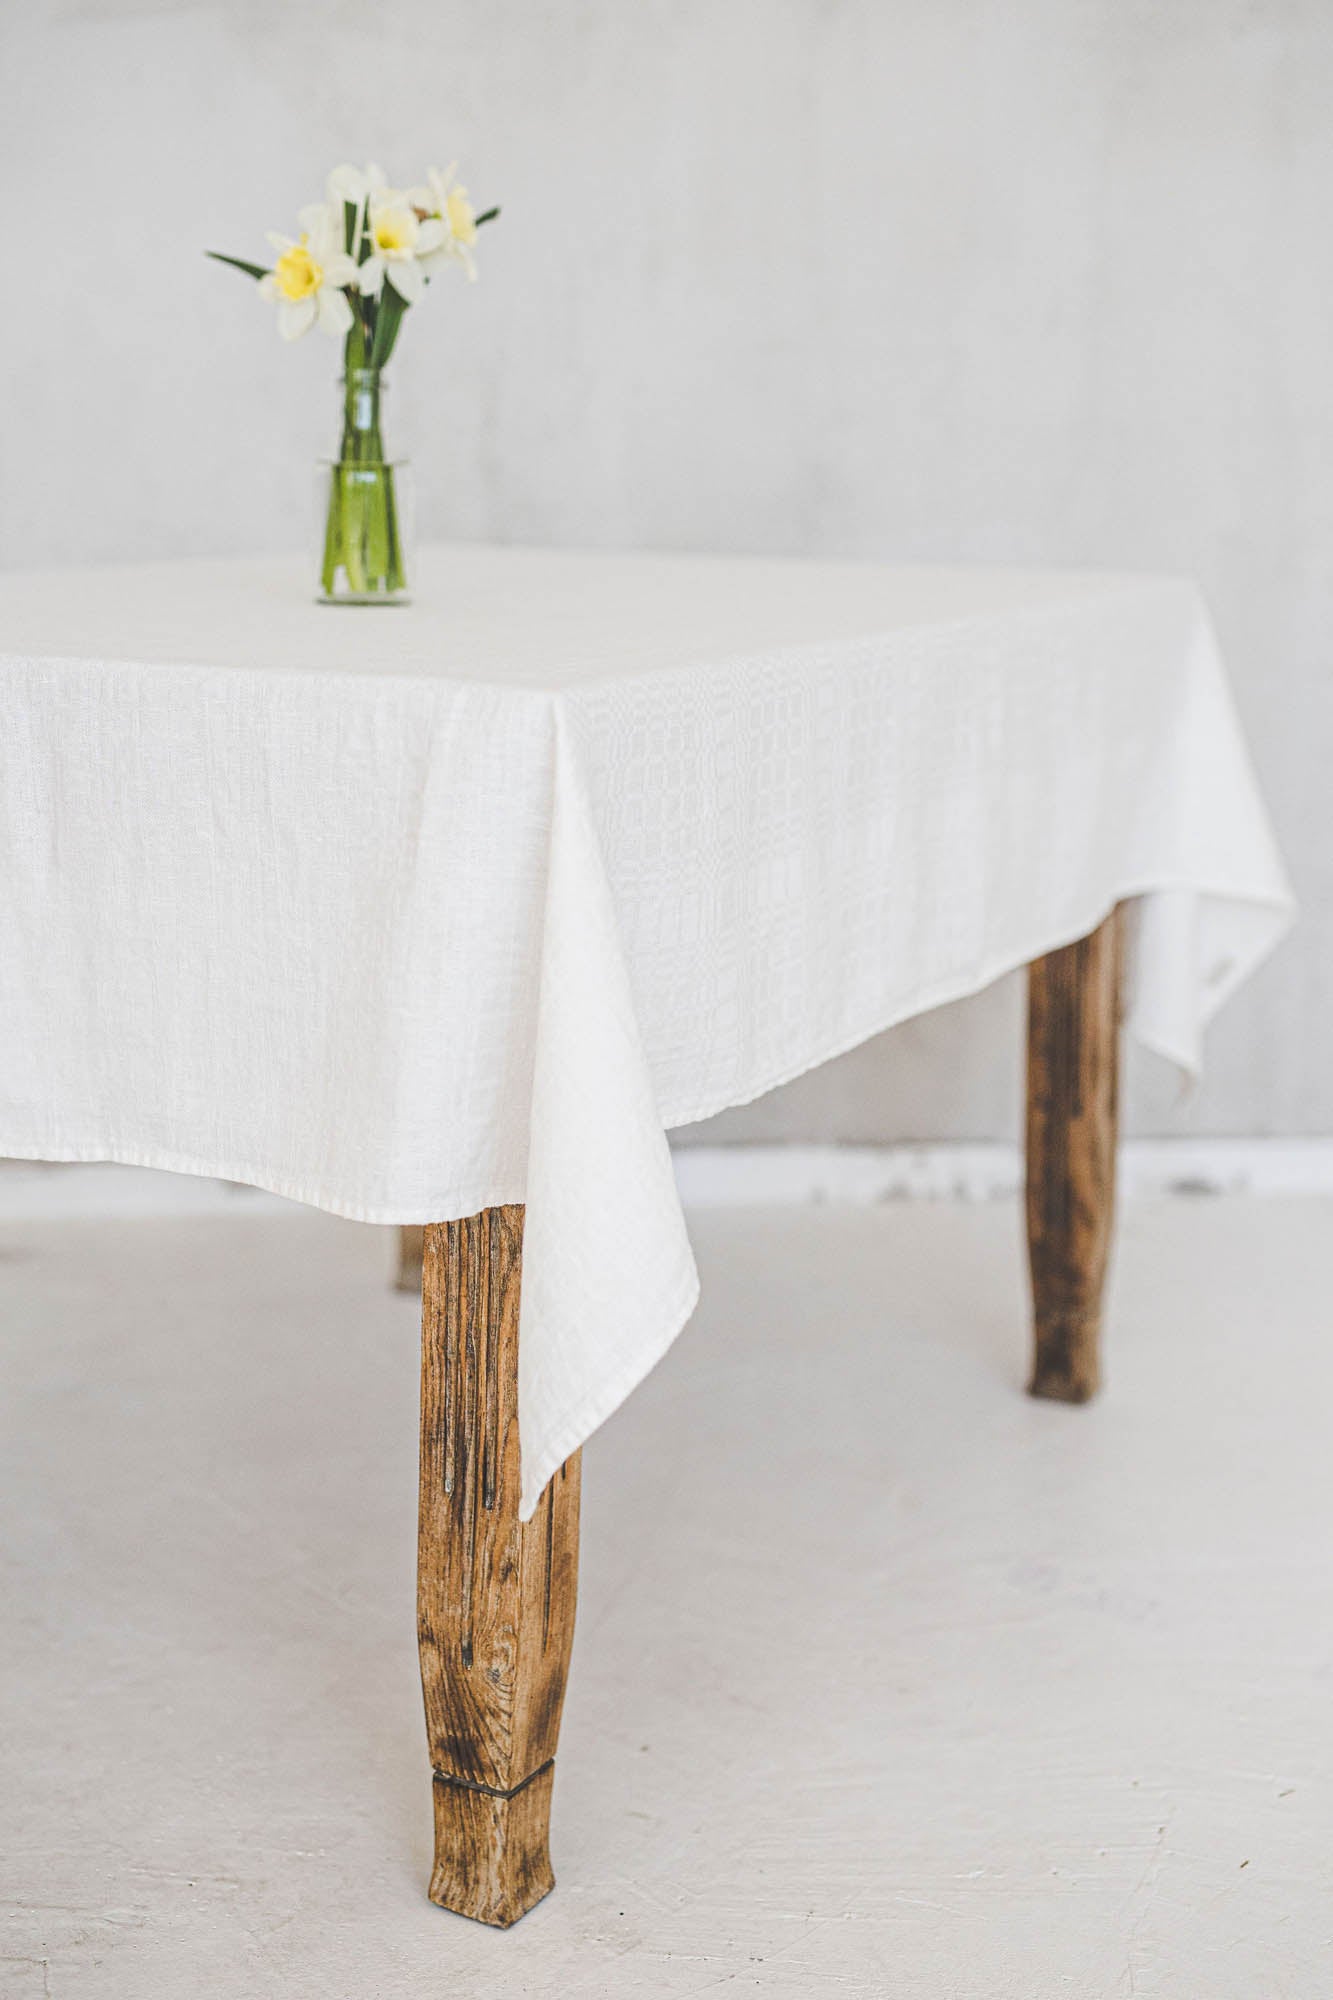 White jacquard linen tablecloth